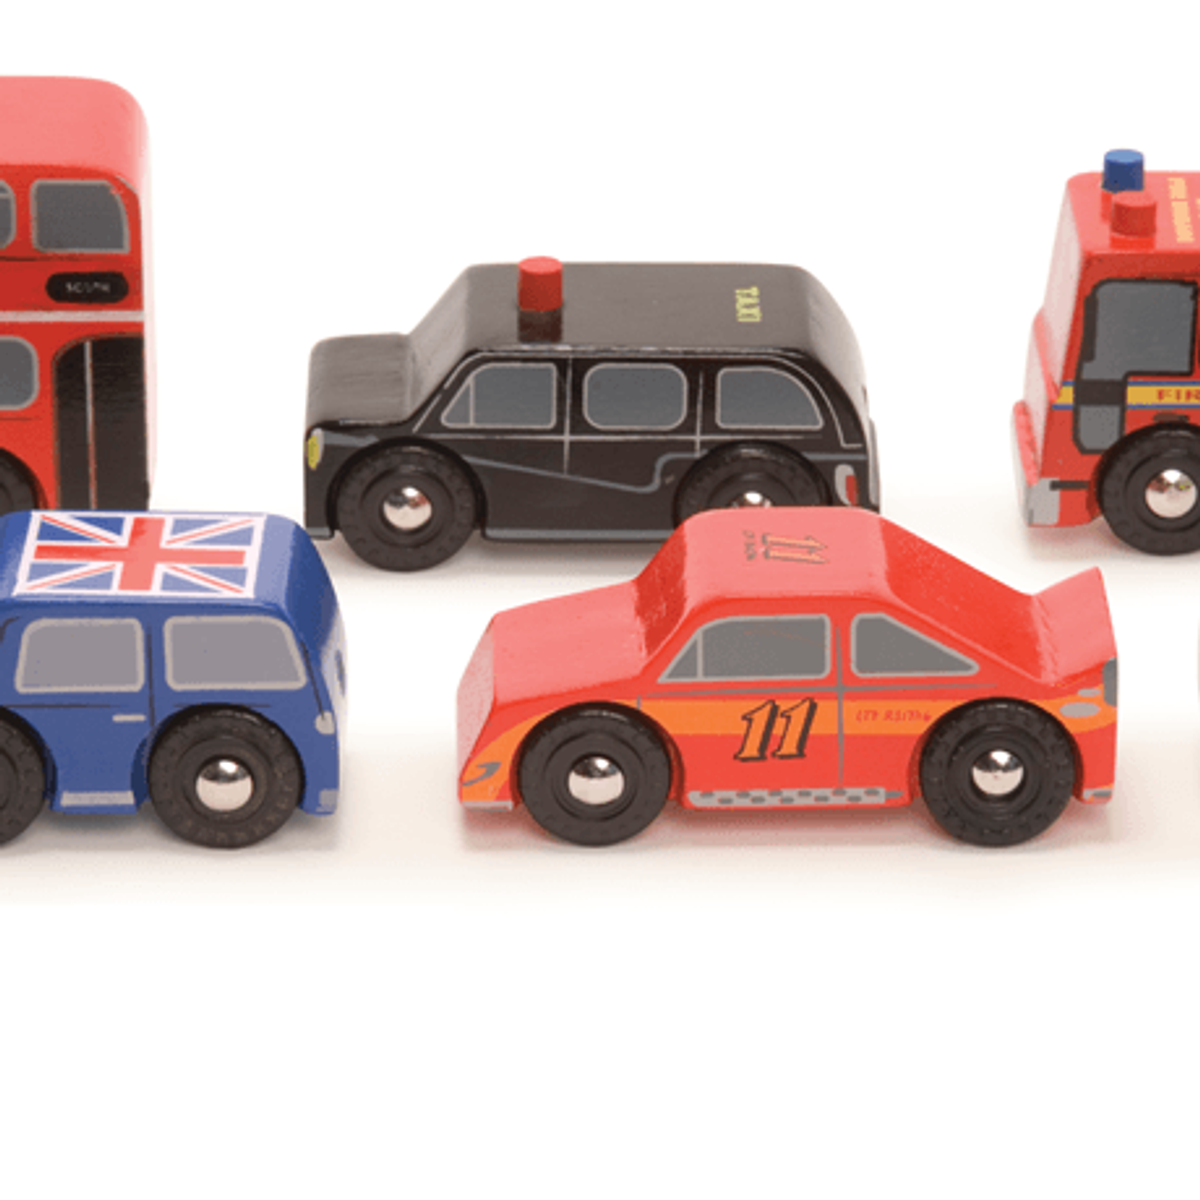 Le Toy Van London Set